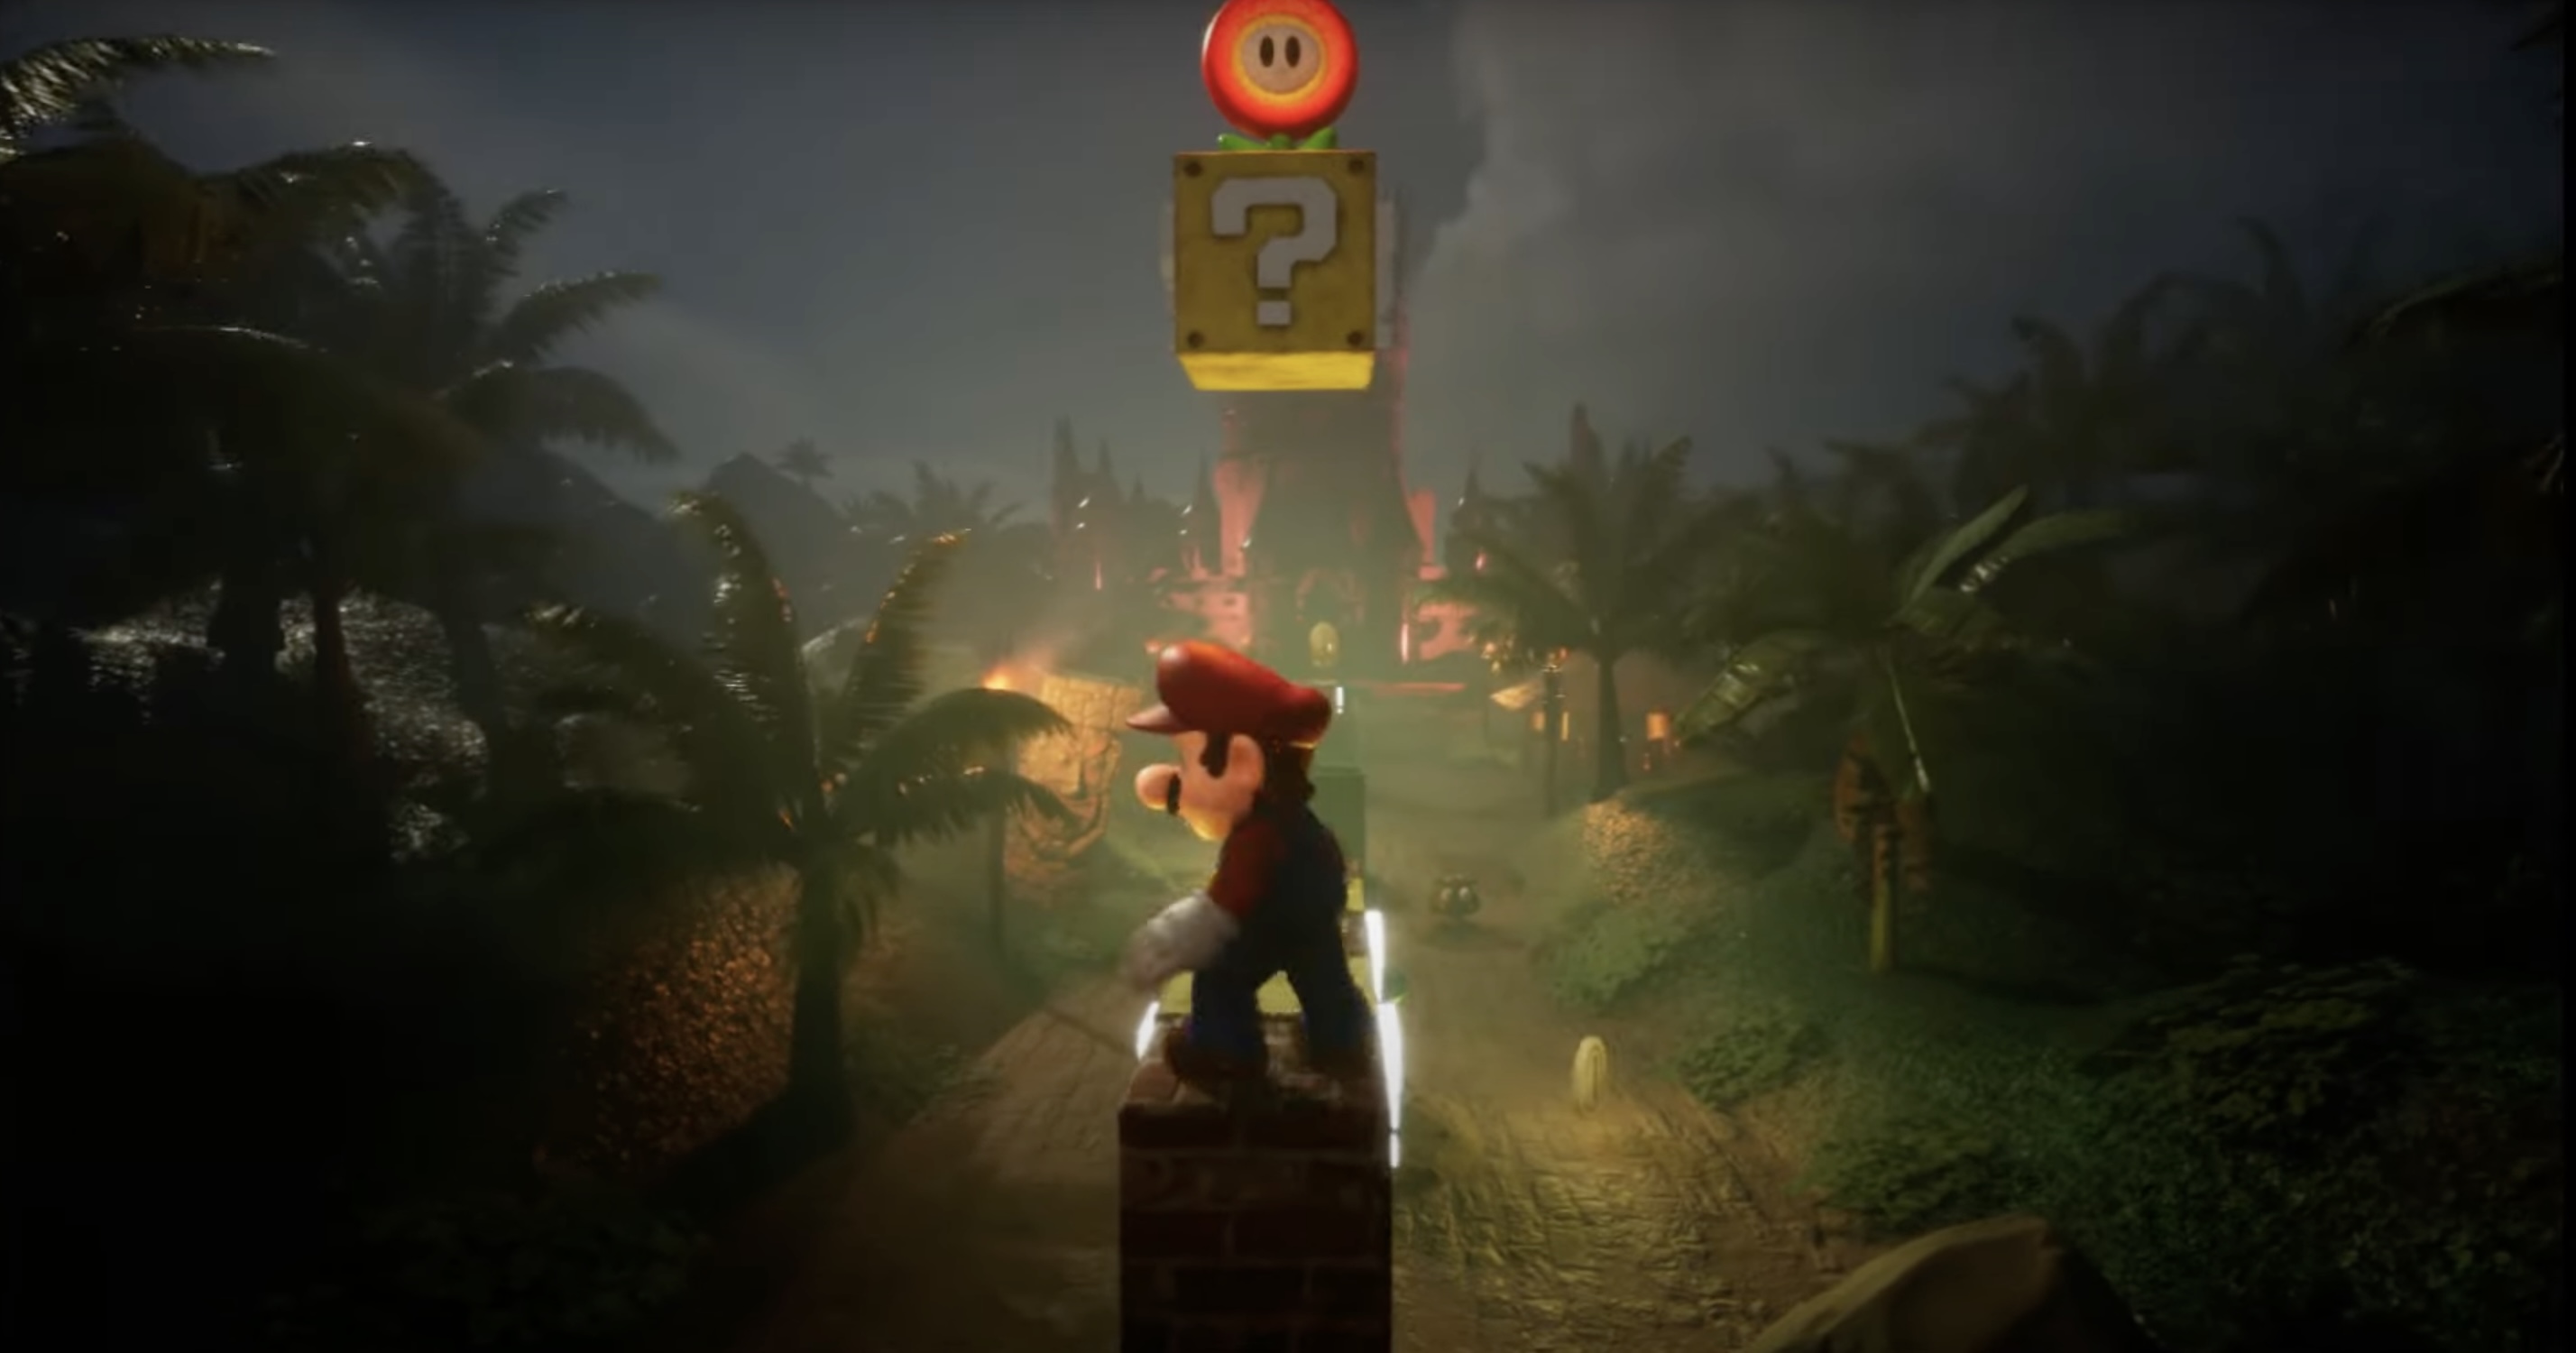 Super Mario RTX looks glorious in Unreal Engine 5